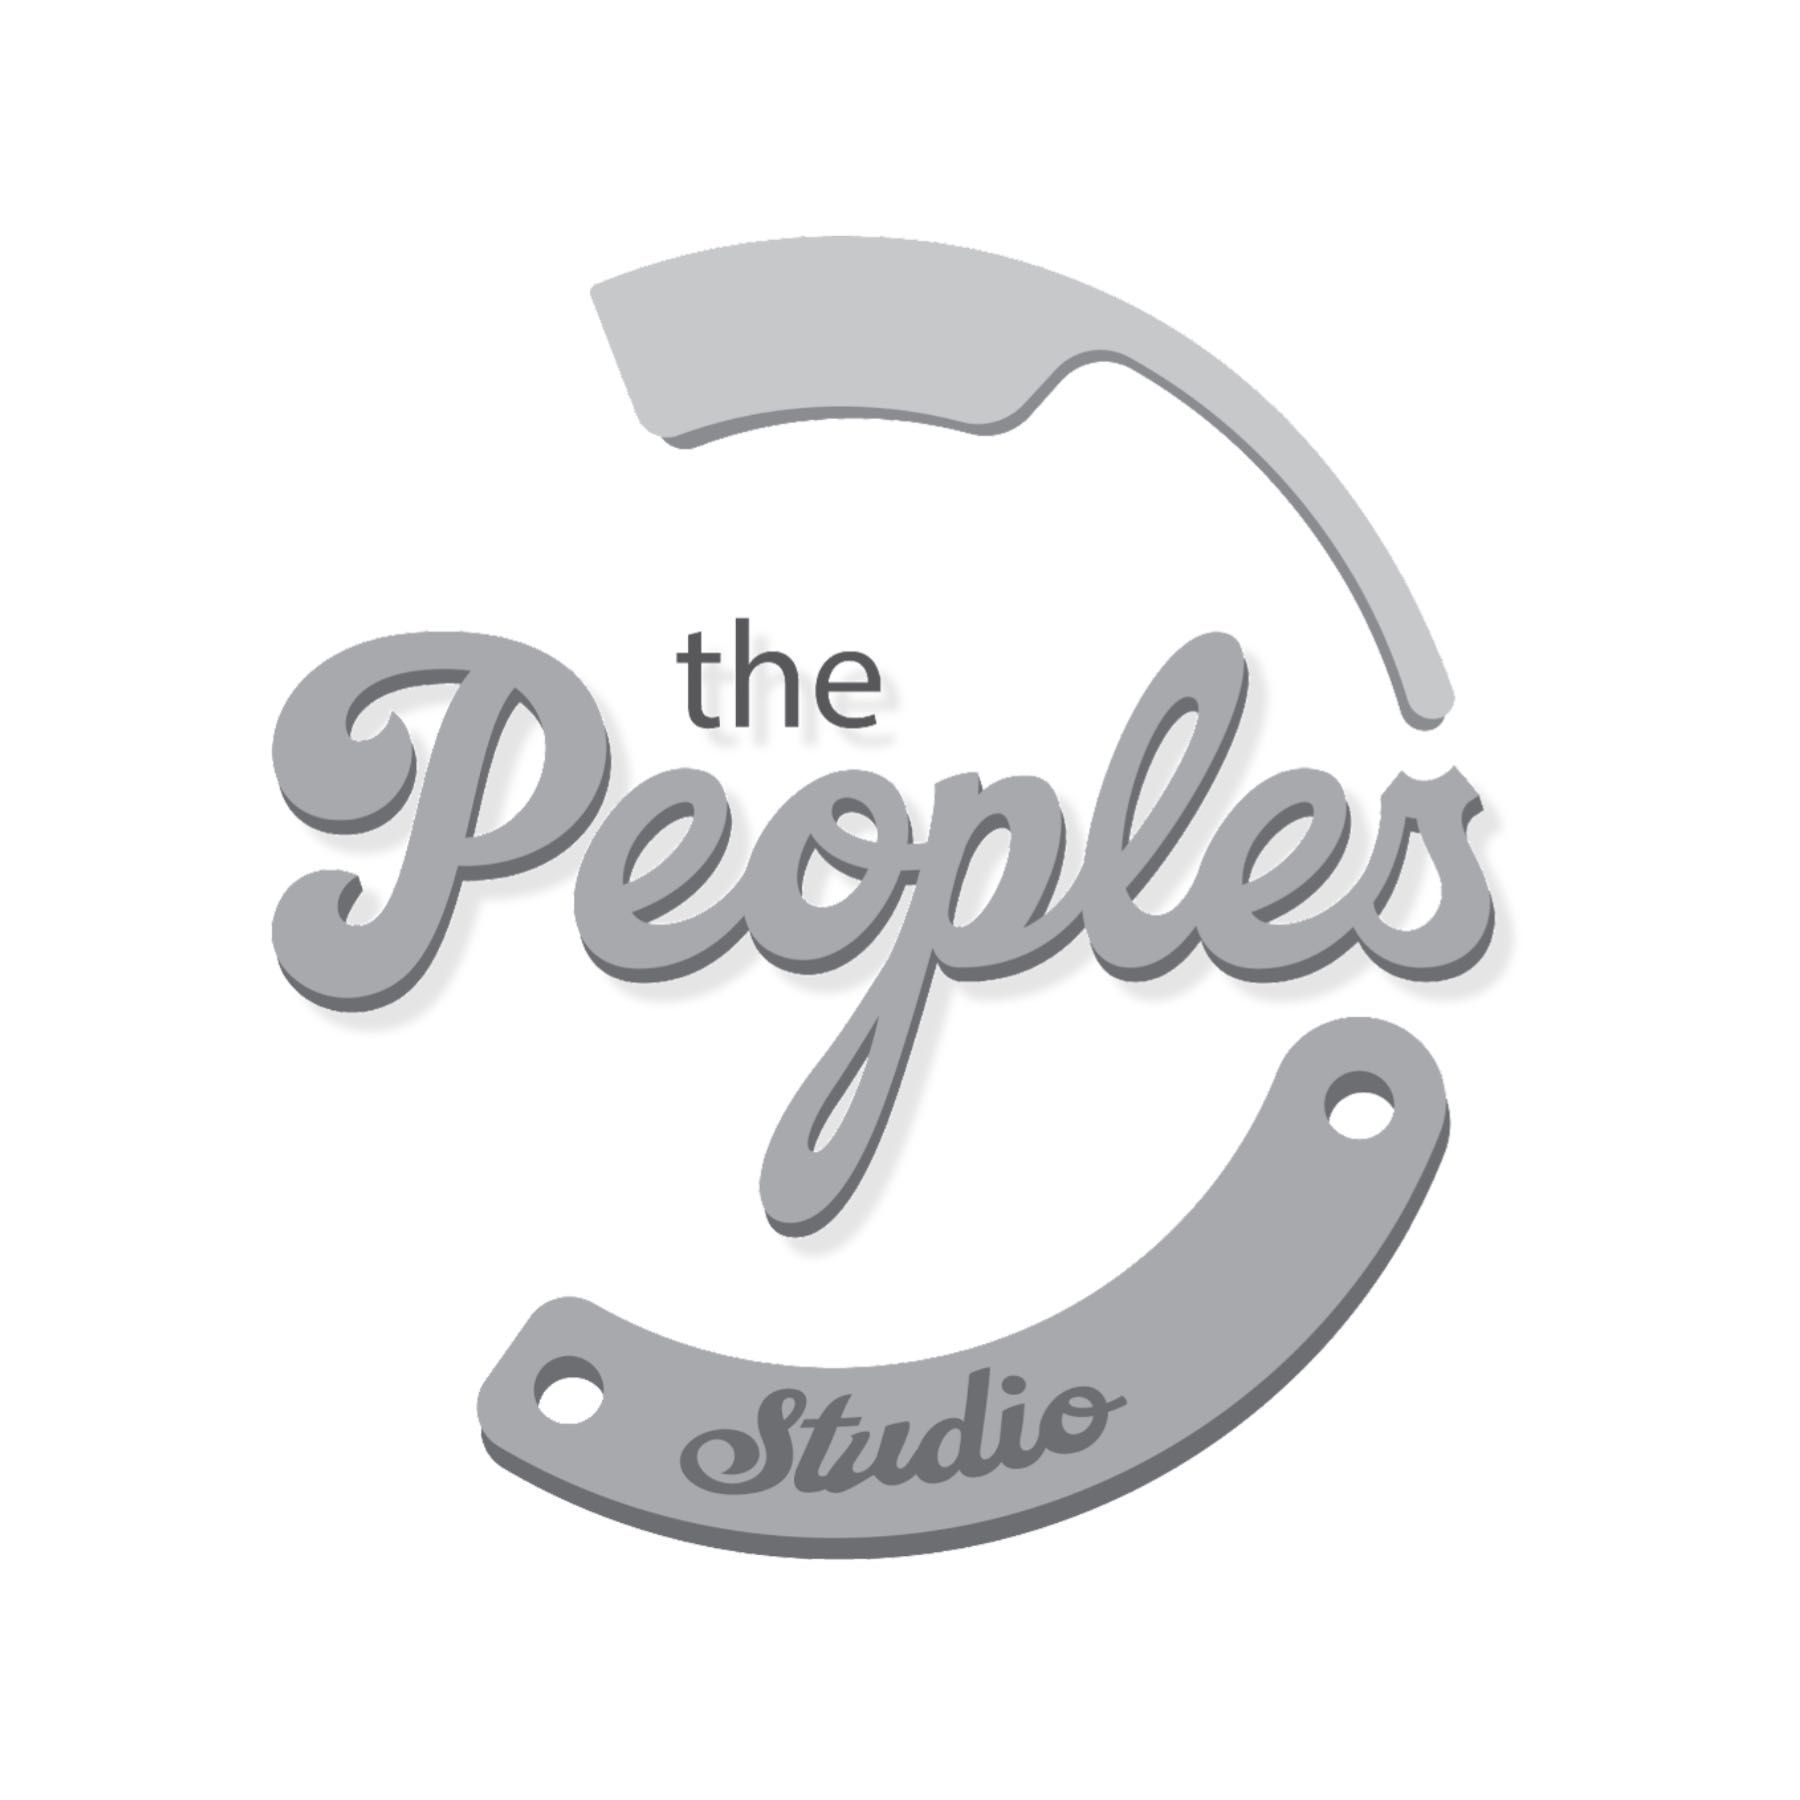 The People’s Studio Co., 16842 saticoy st, Van Nuys, Van Nuys 91406